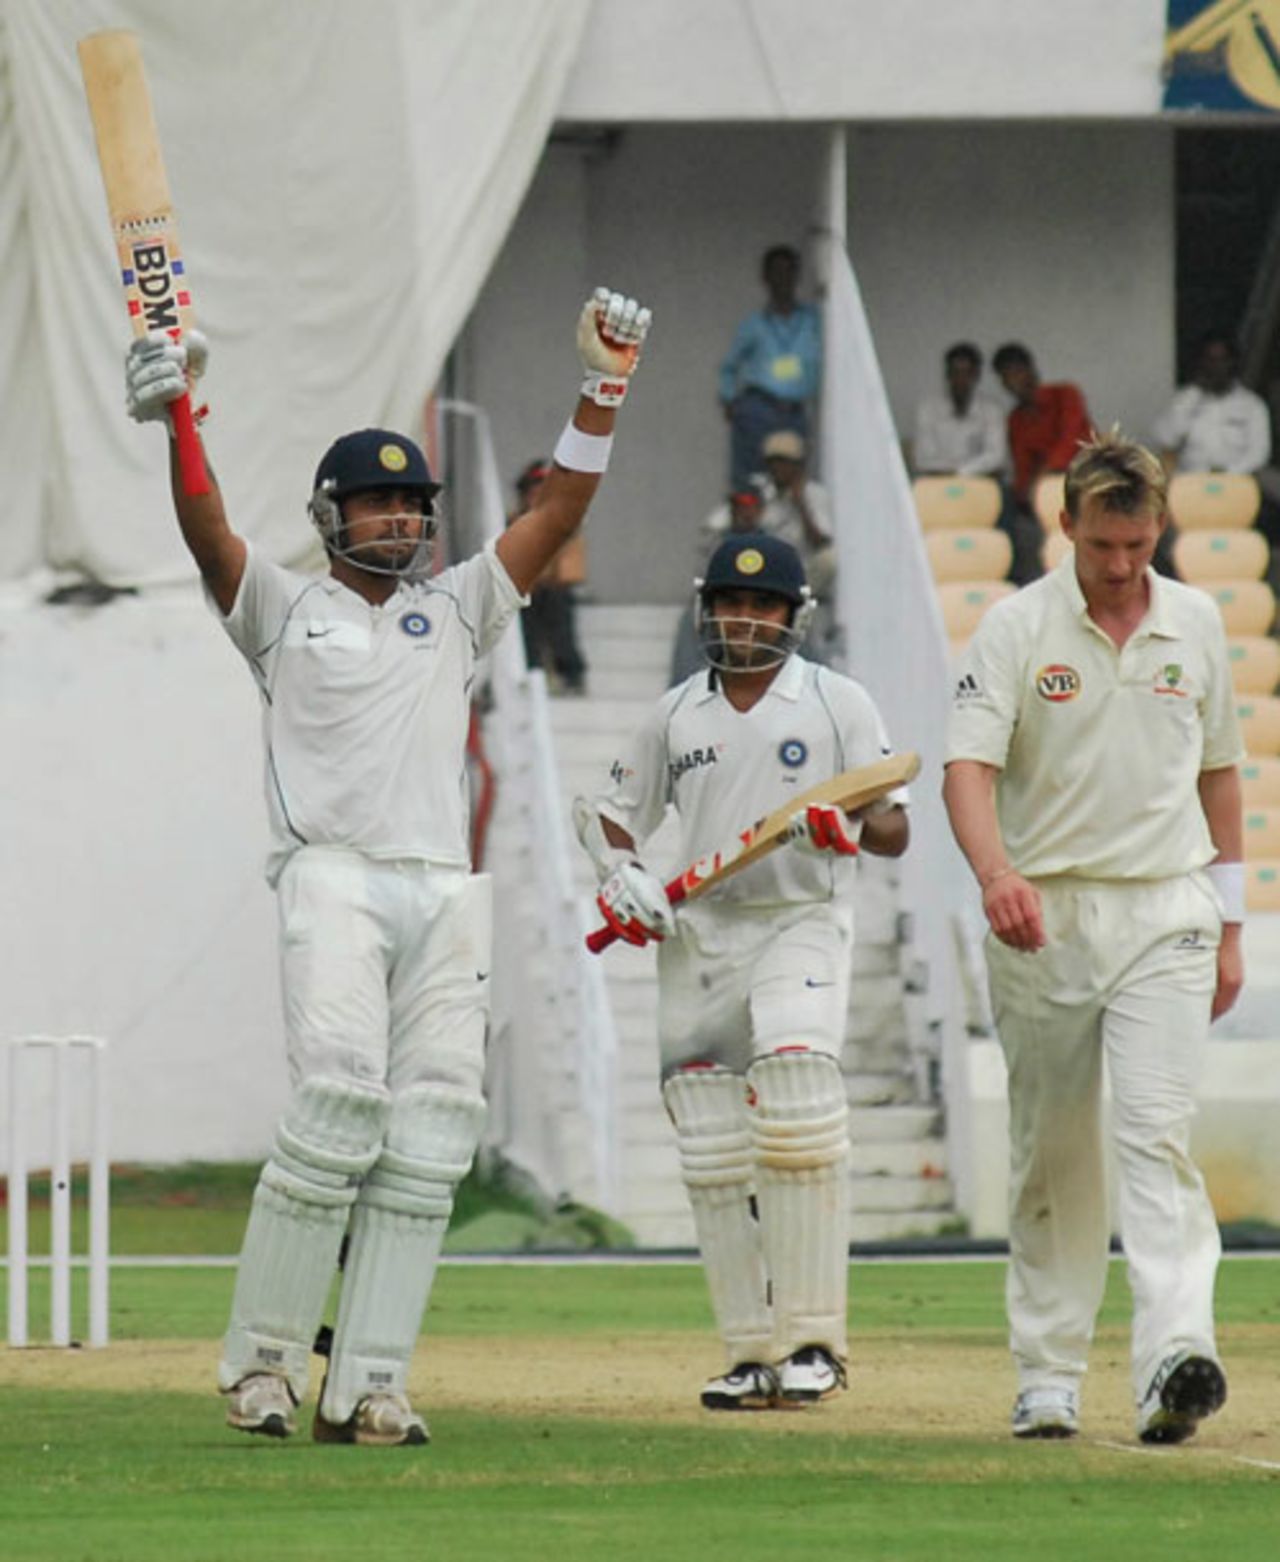 Virat Kohli raises his bat to celebrate his century, Indian Board President's XI v Australians, Hyderabad, October 2, 2008

